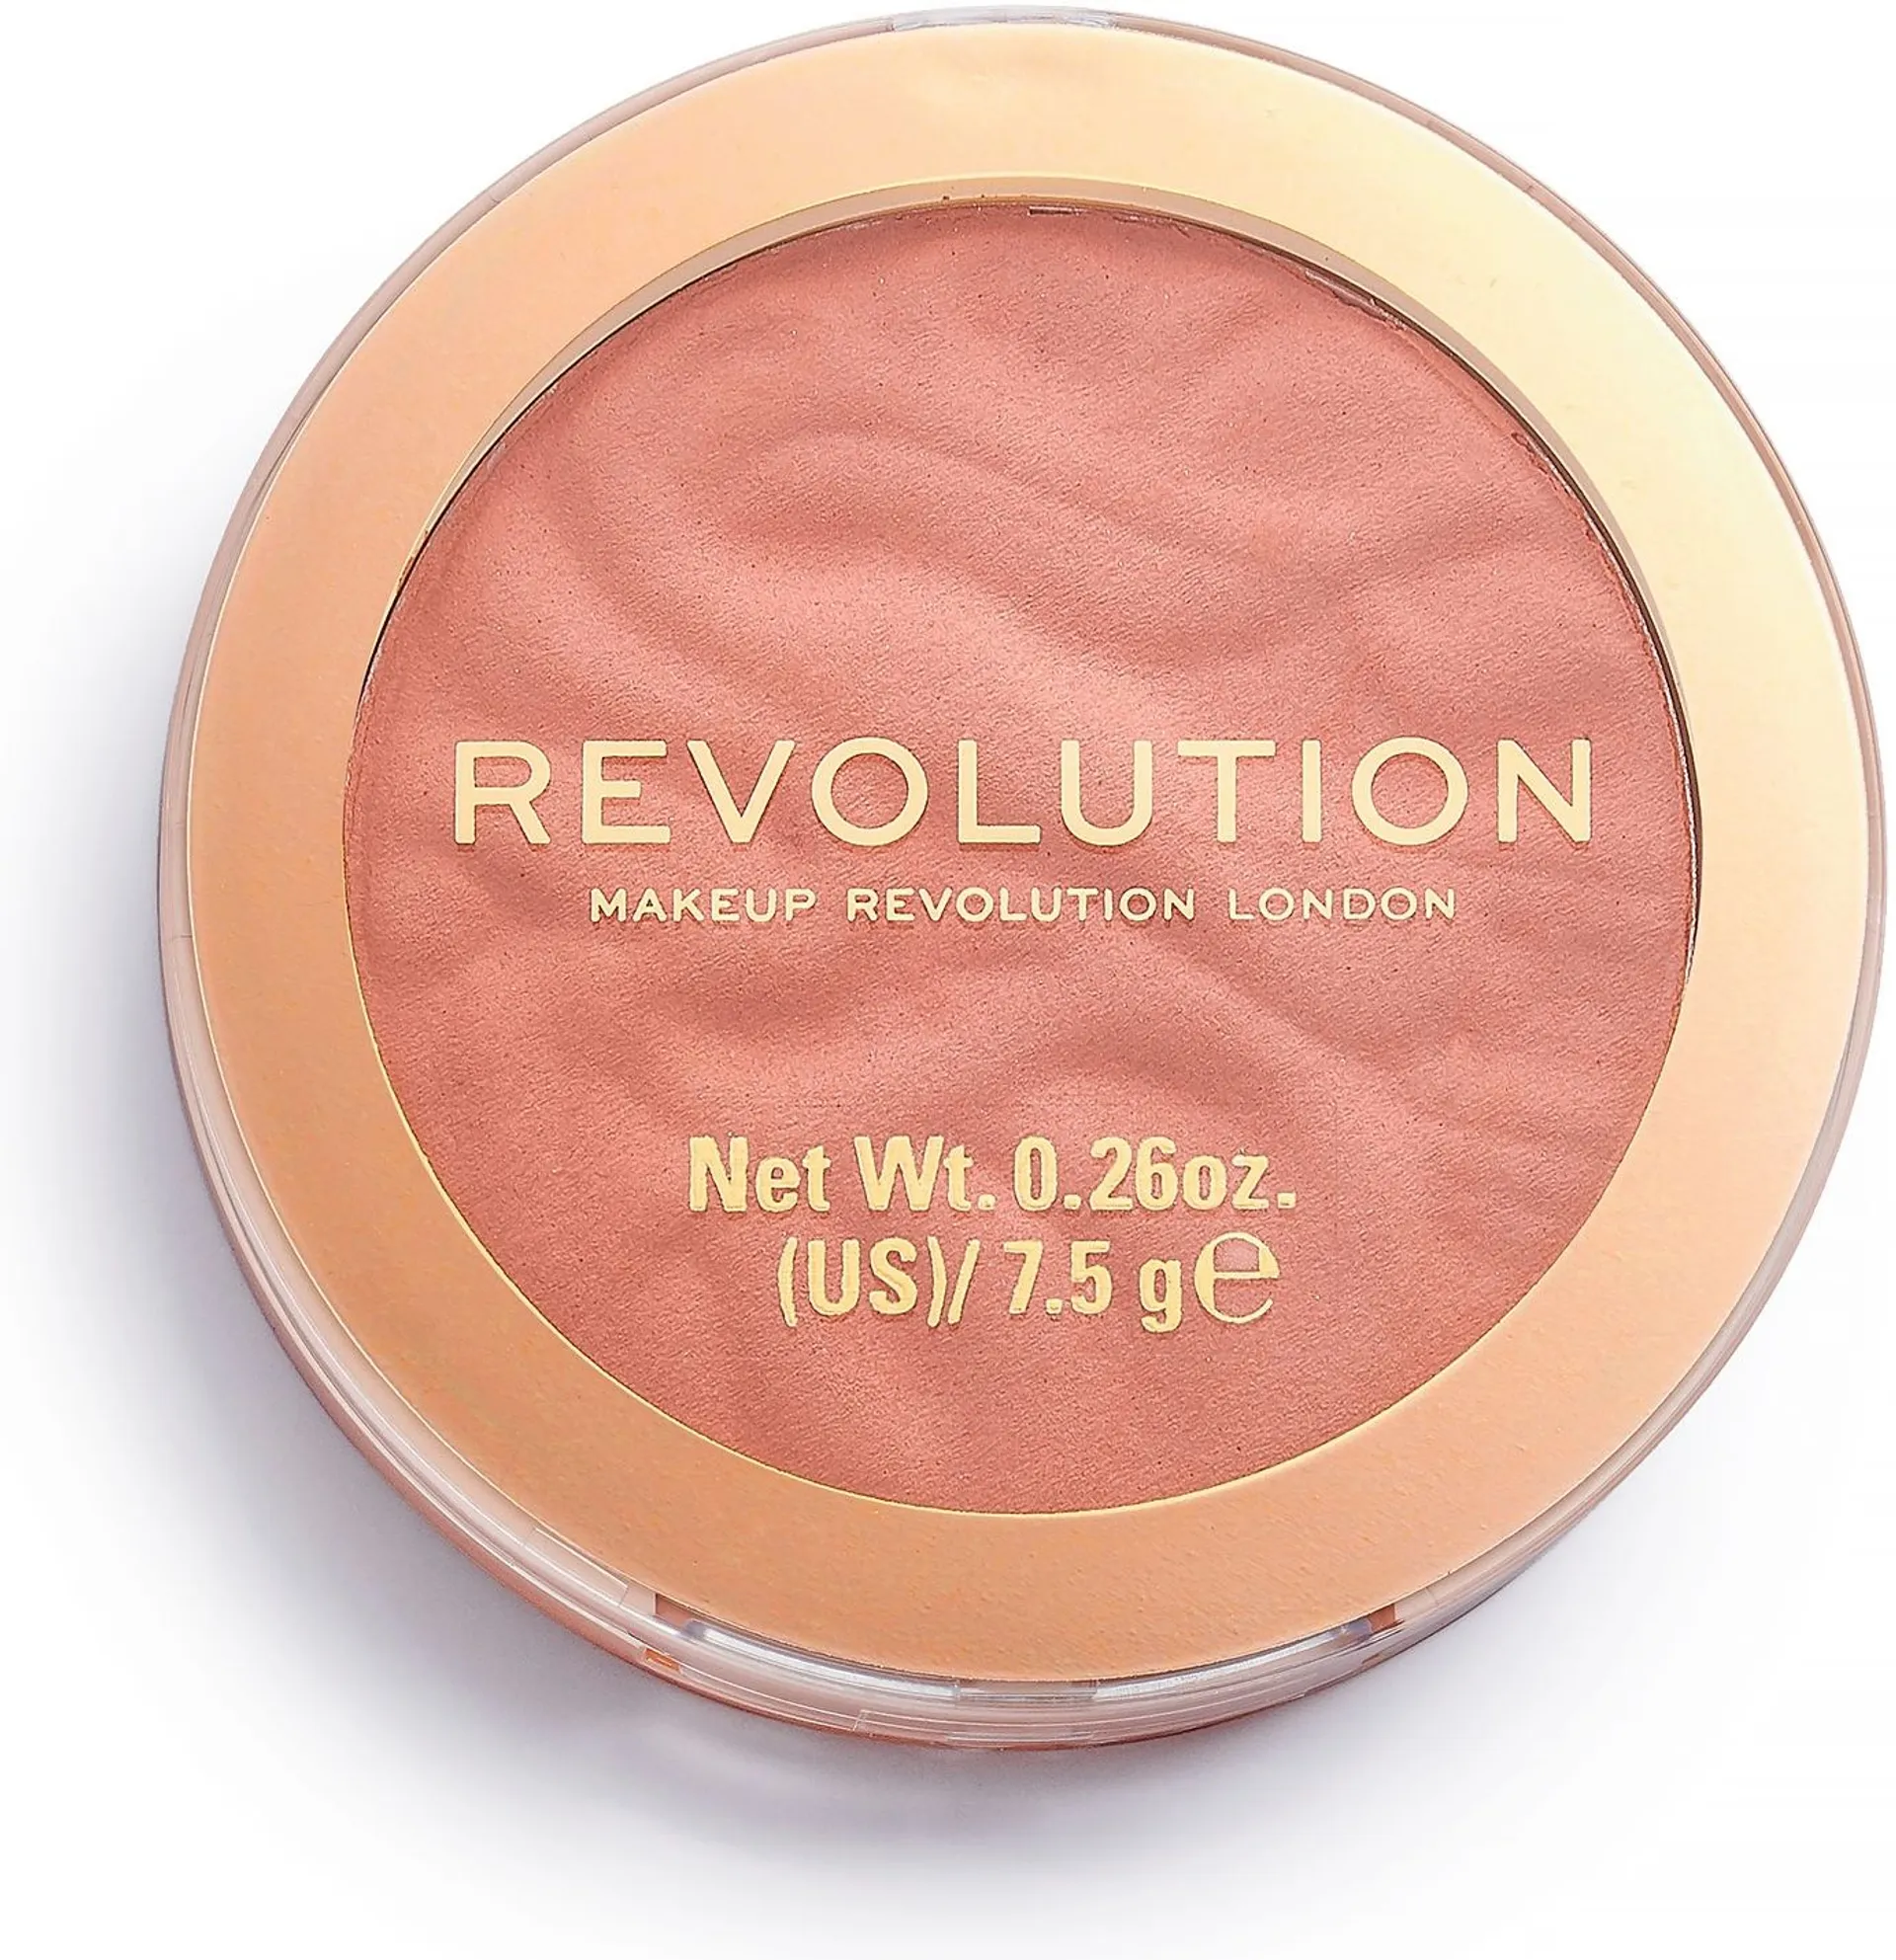 Makeup Revolution Reloaded Rhubarb and Custard poskipuna - 1